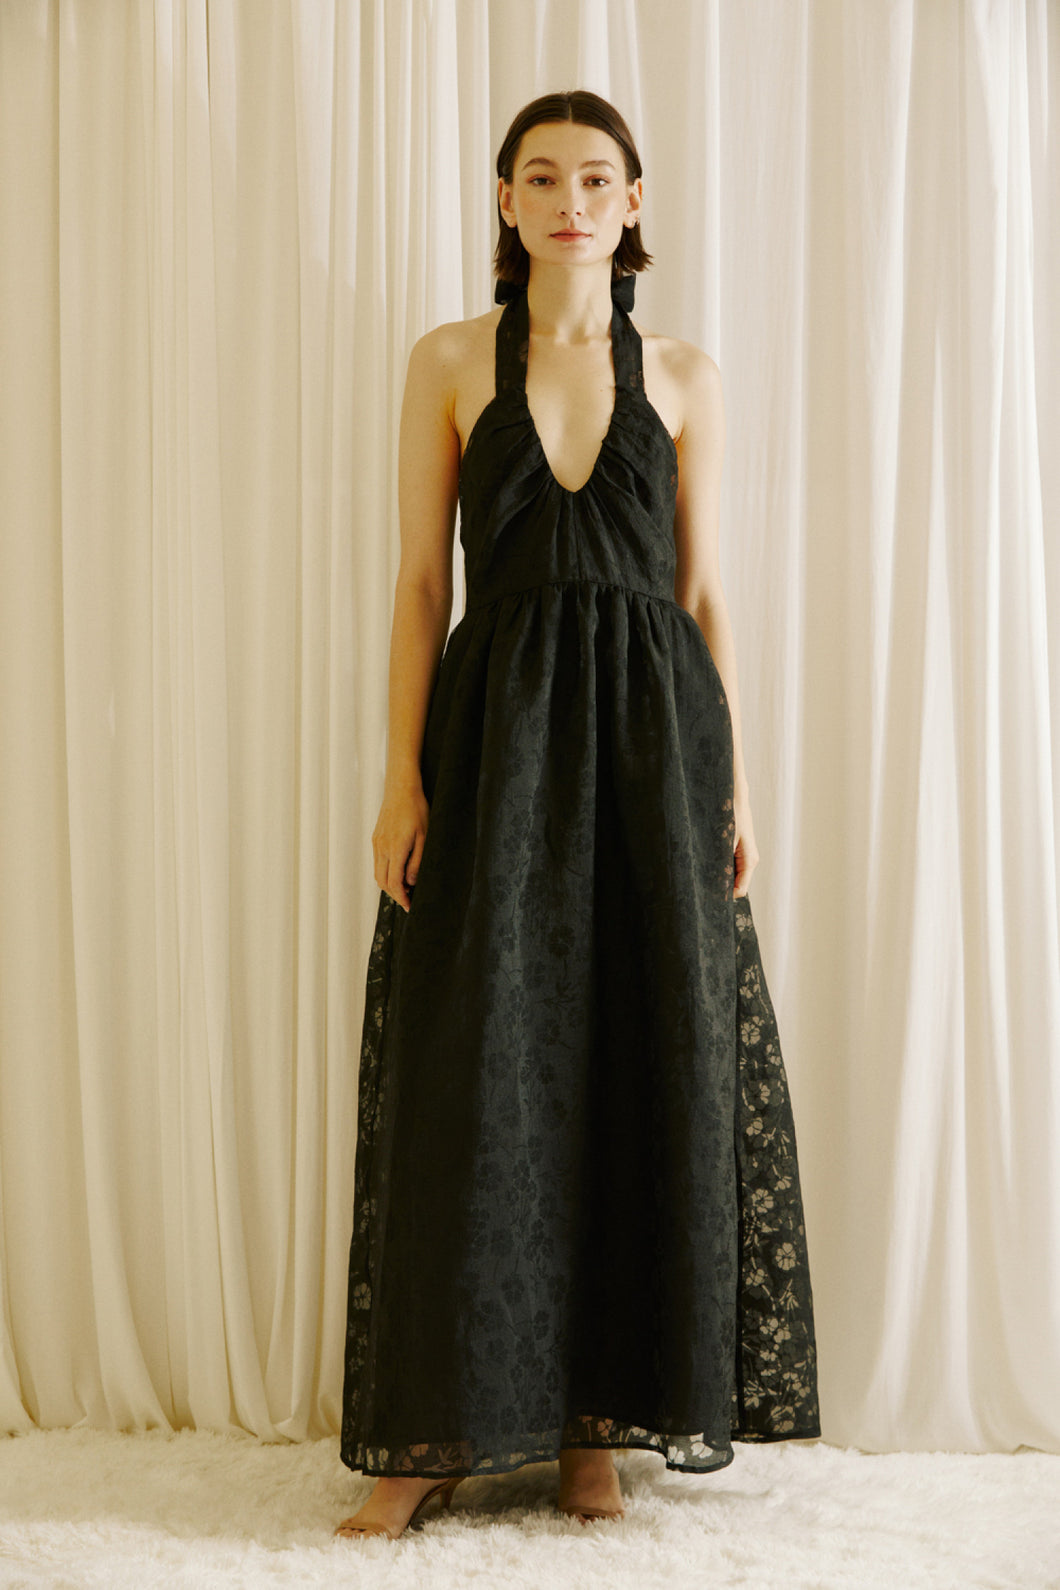 Lace Maxi Dress - Black